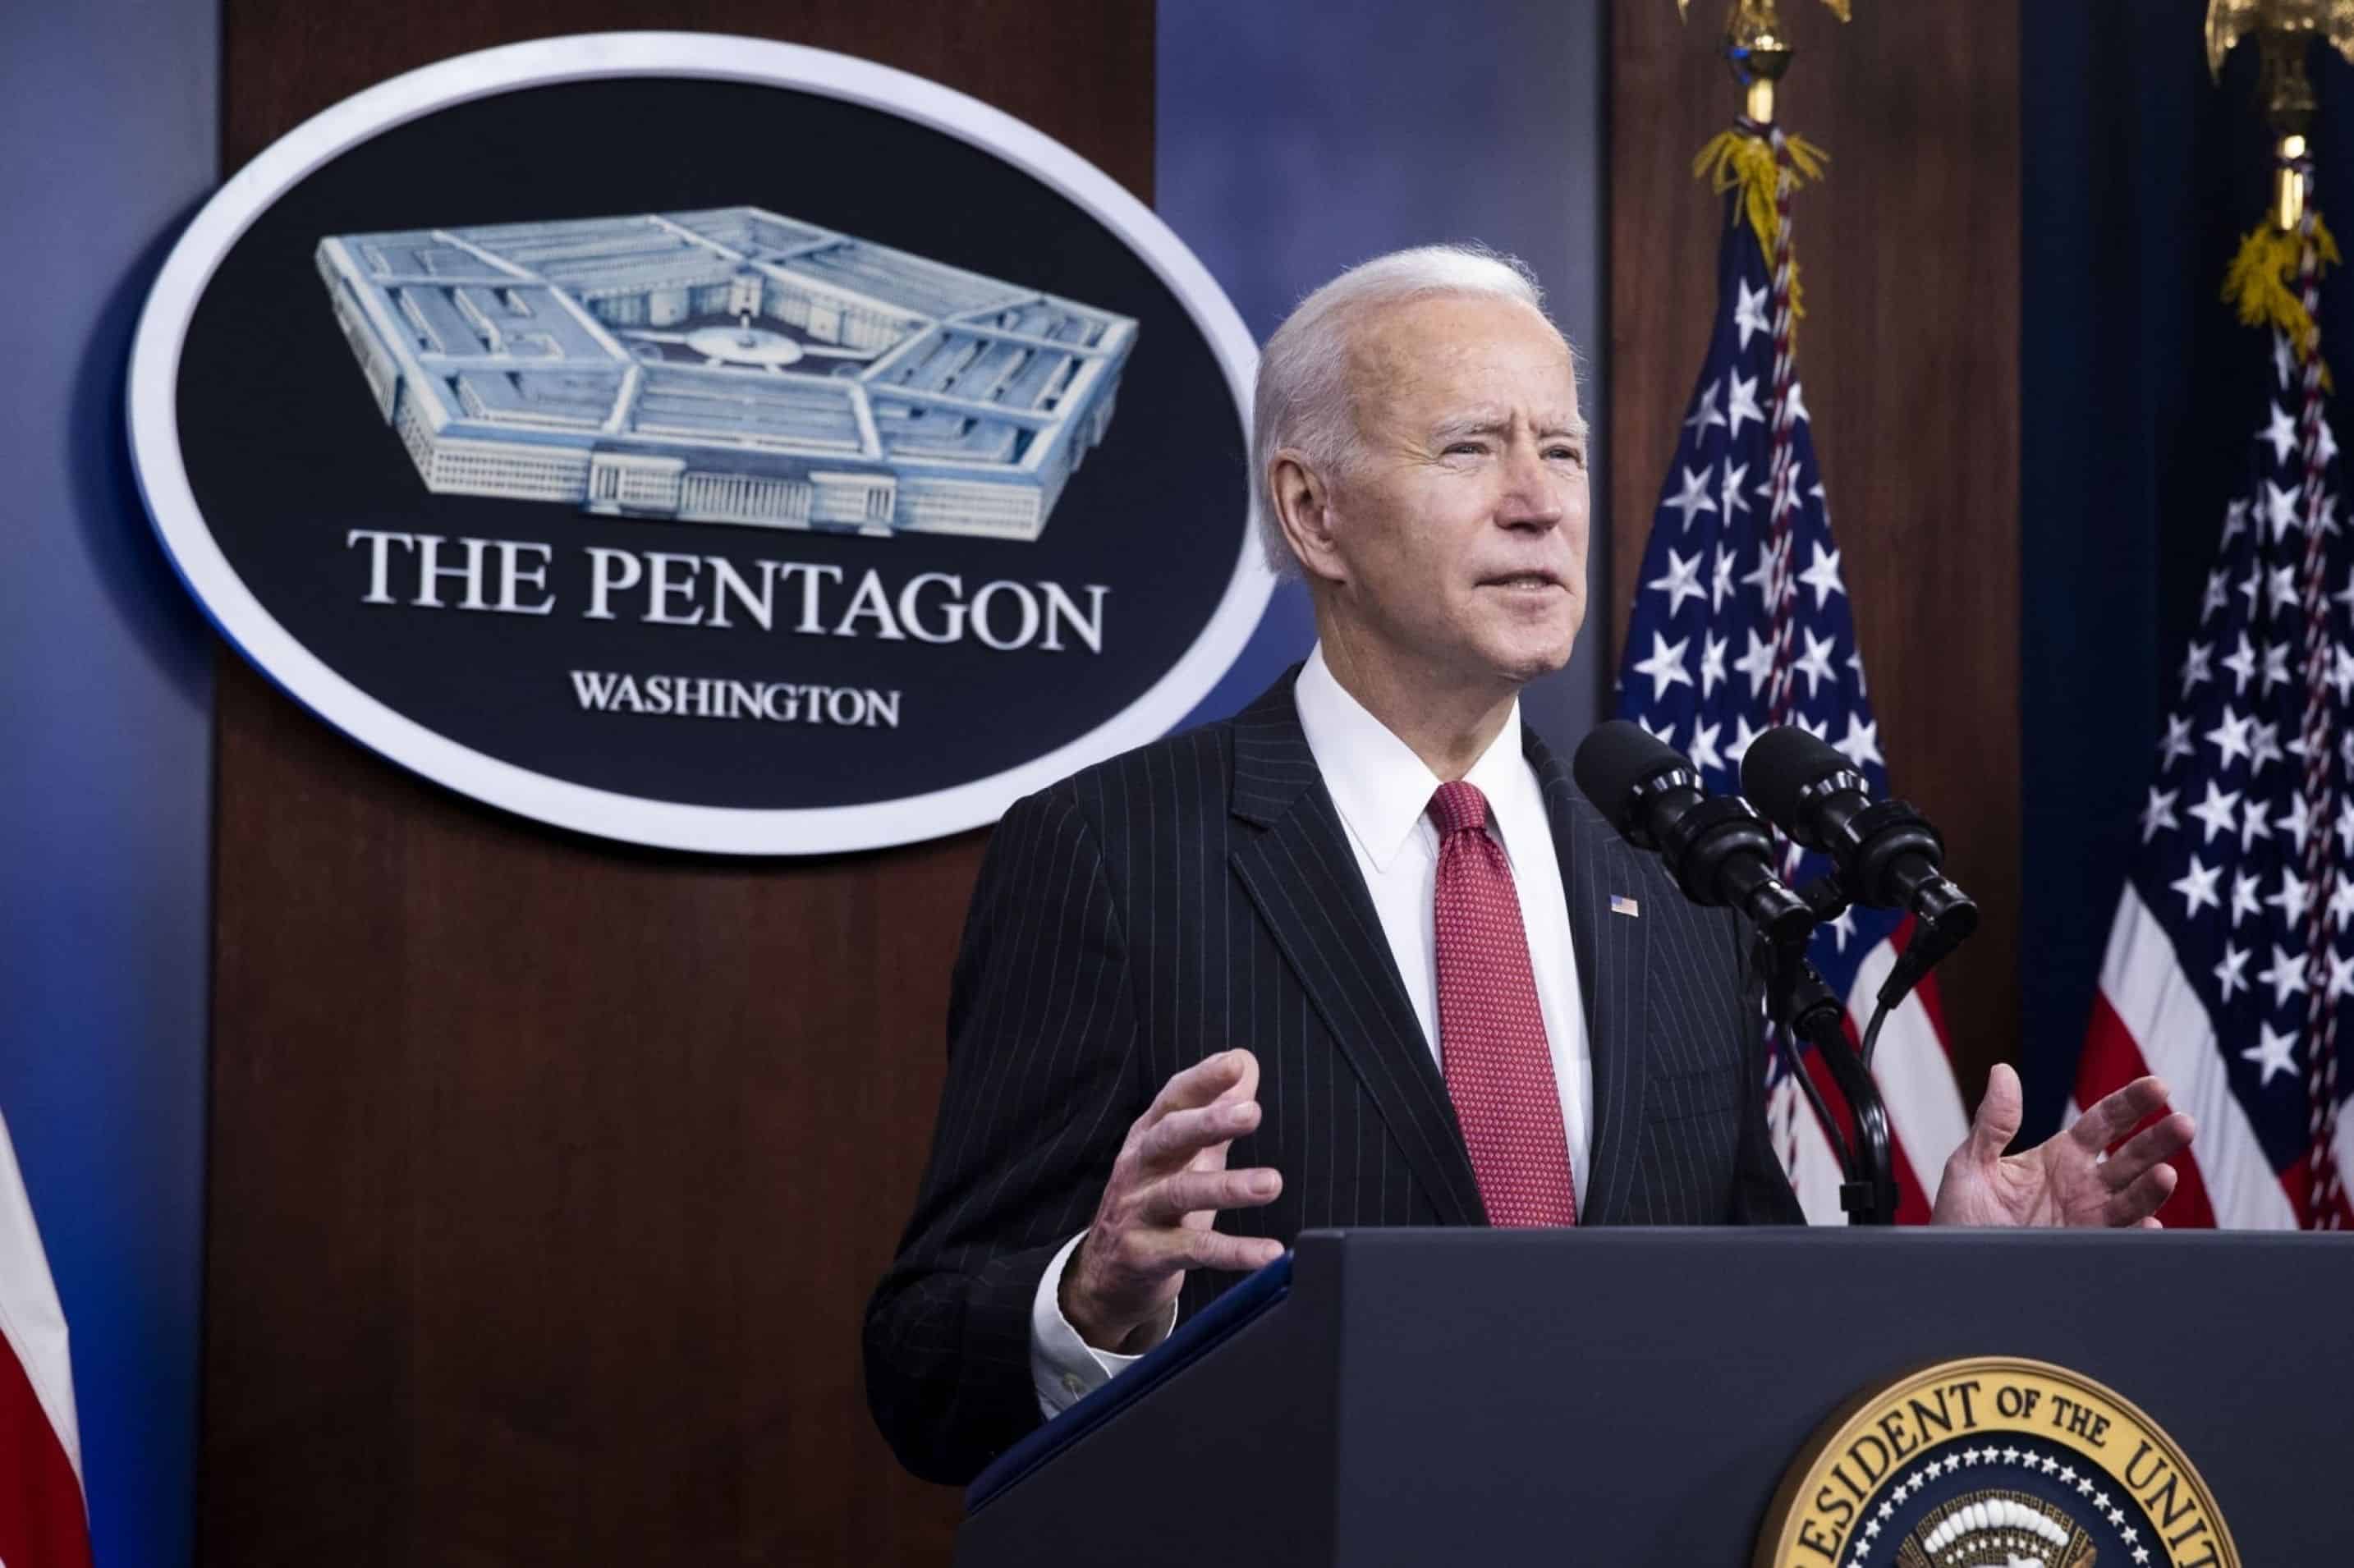 U.S. President Joe Biden speaks at the Pentagon in Arlington, Virginia, U.S., on Wednesday, Feb. 10, 2021.